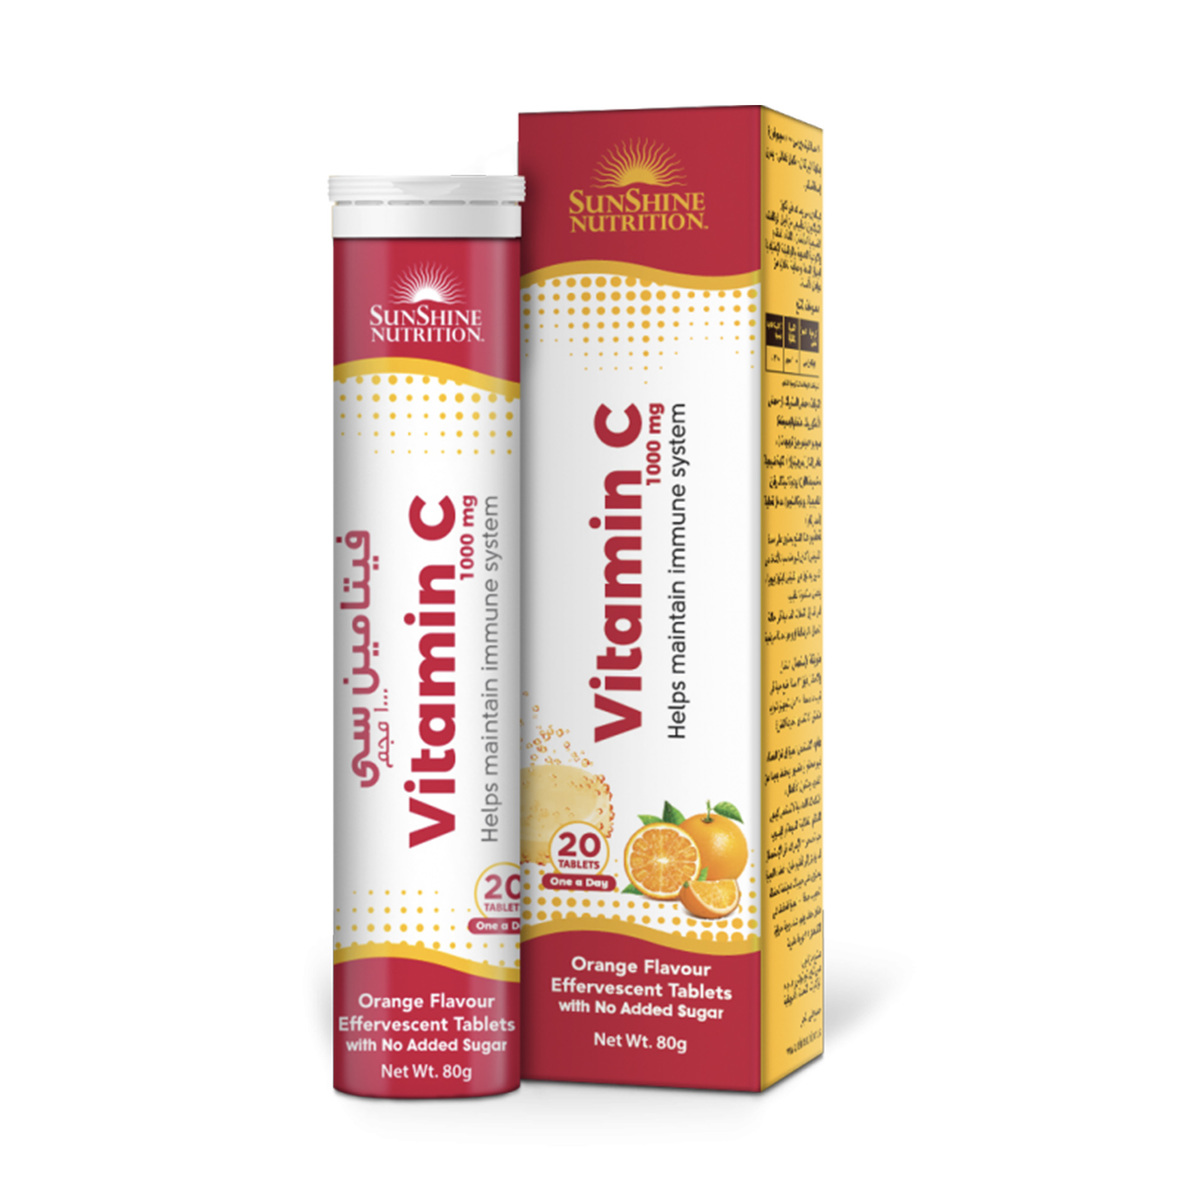 Buy Sunshine Nutrition Vitamin C 1000 Mg Orange Flavour Effervescent Tablets Online Lulu Hypermarket Uae